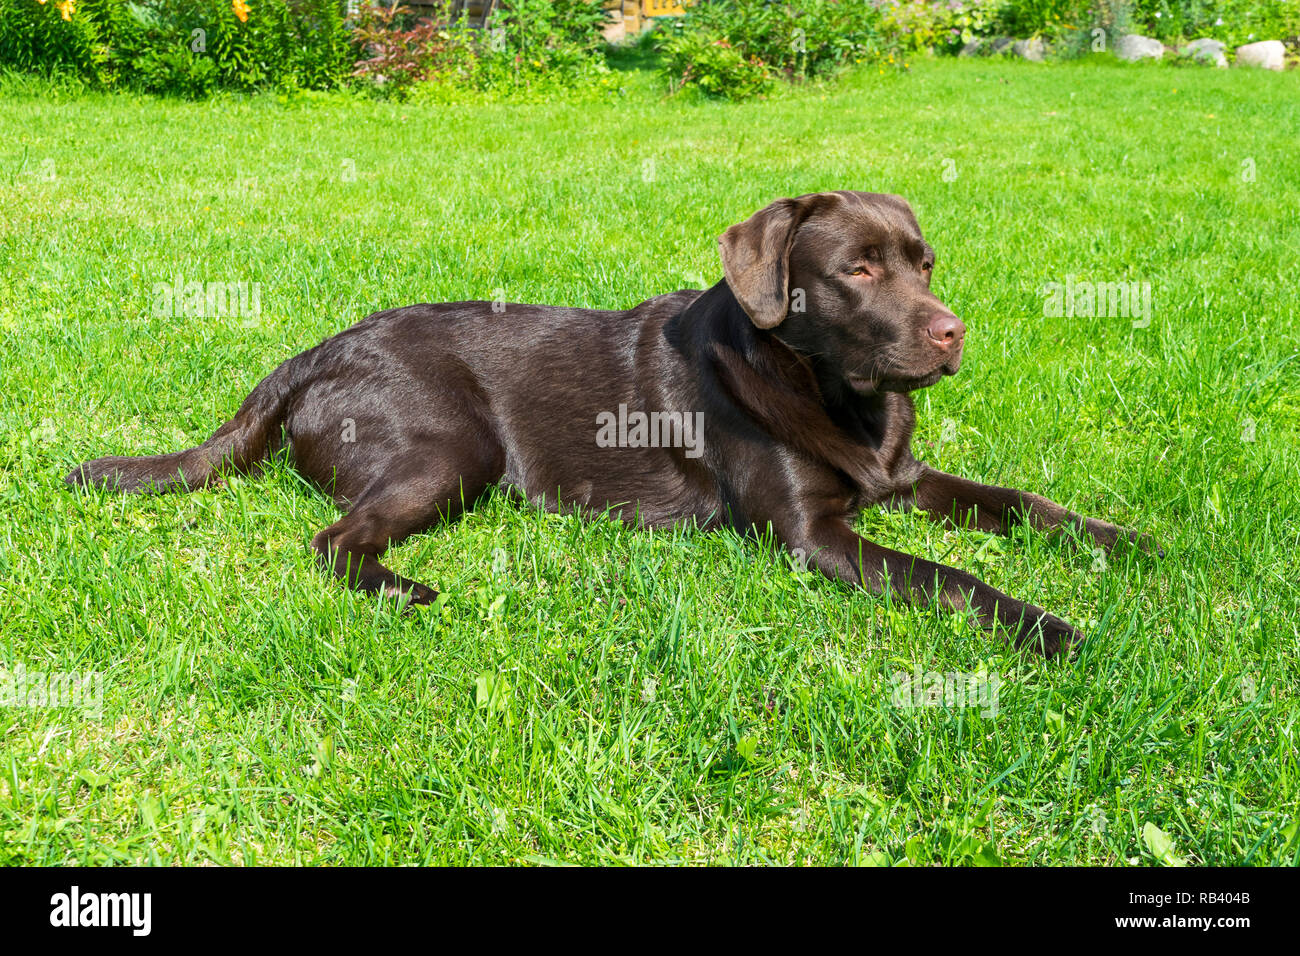 Braun Chocolate Labrador Retriever. Hund auf das grüne Gras. Hund Nase